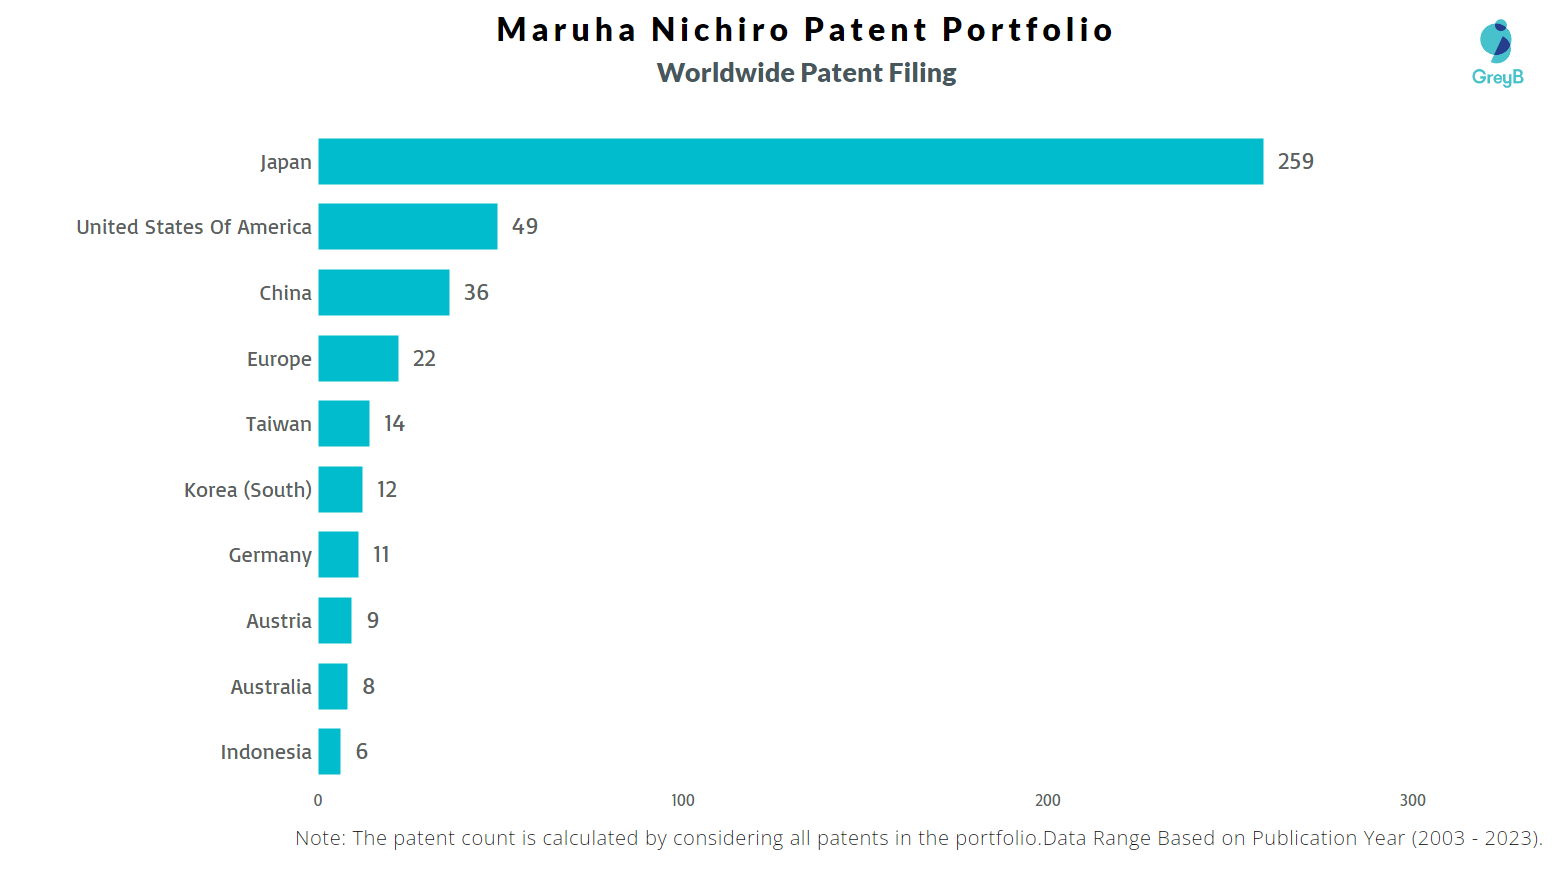 Maruha Nichiro Worldwide Patent Filing